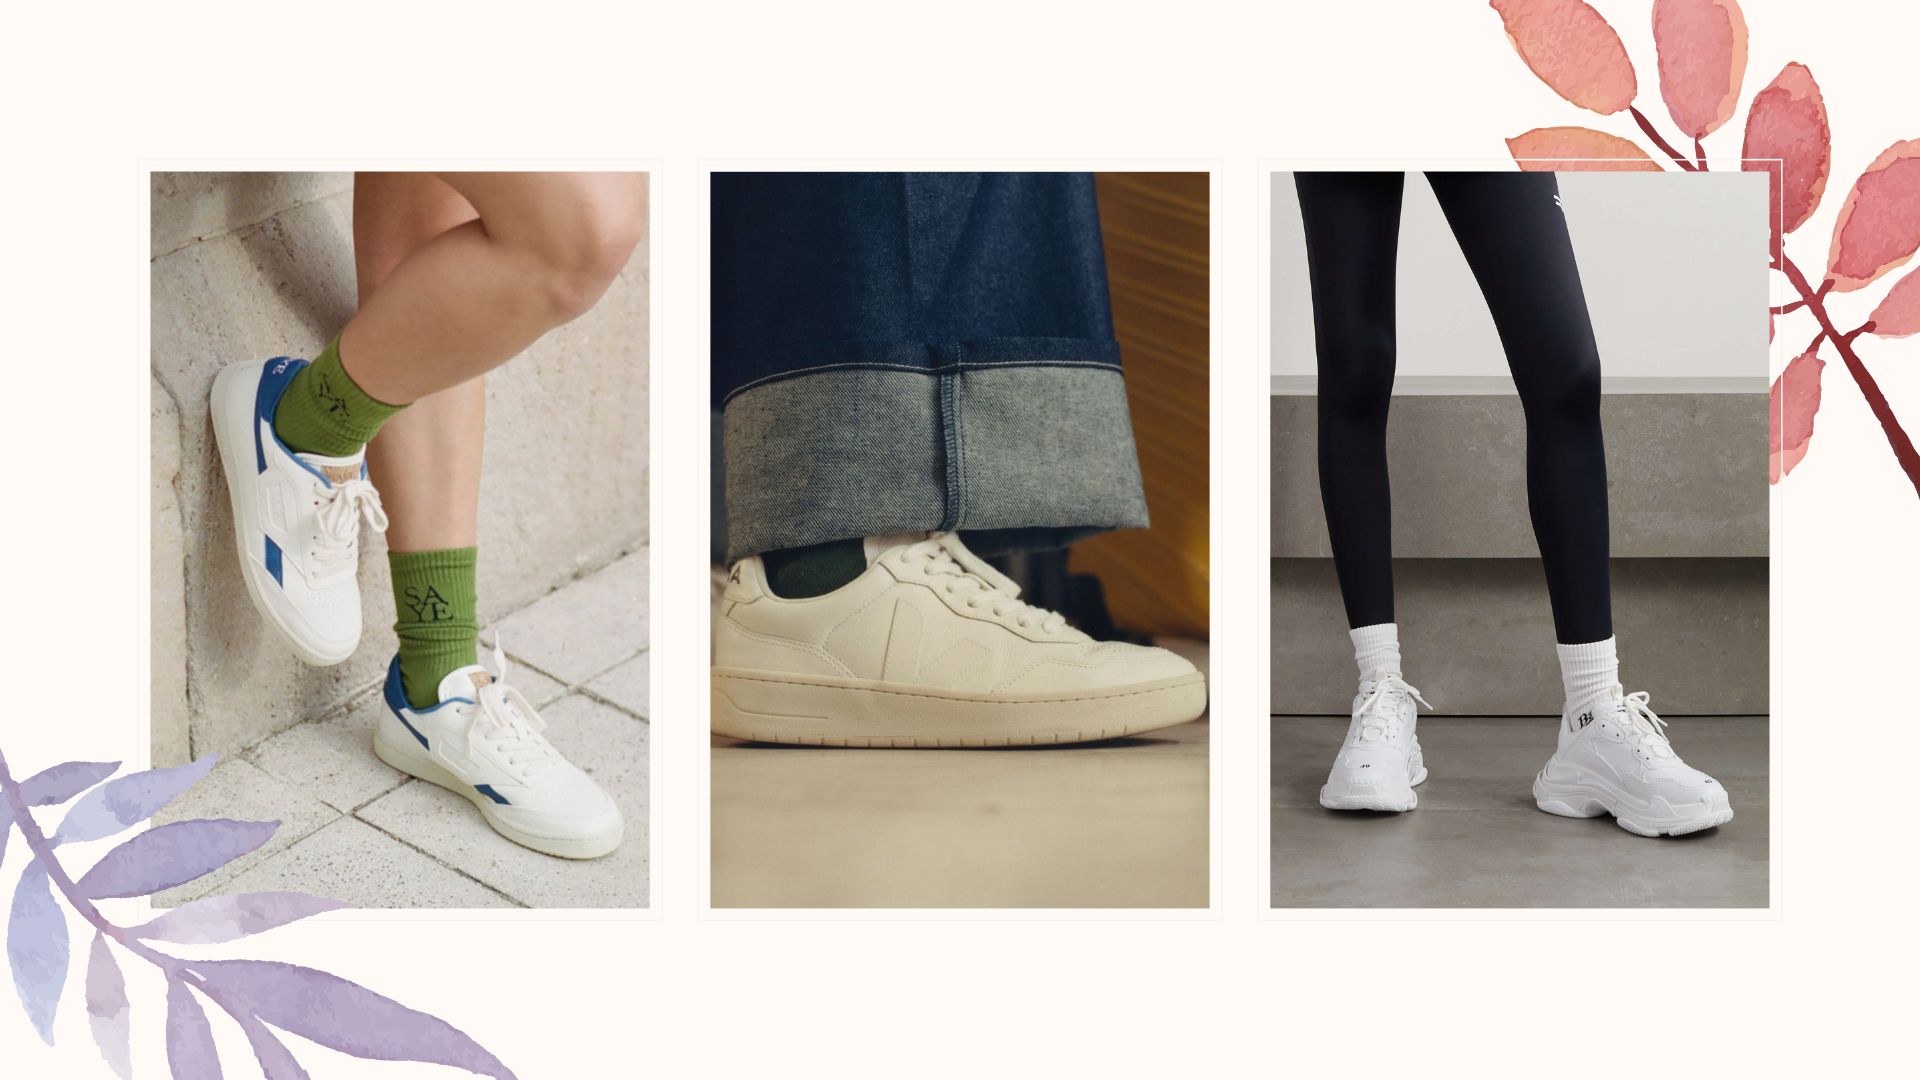 Balenciaga x adidas Stan Smith Takes 'Dirty Sneaker' Trend Too Far